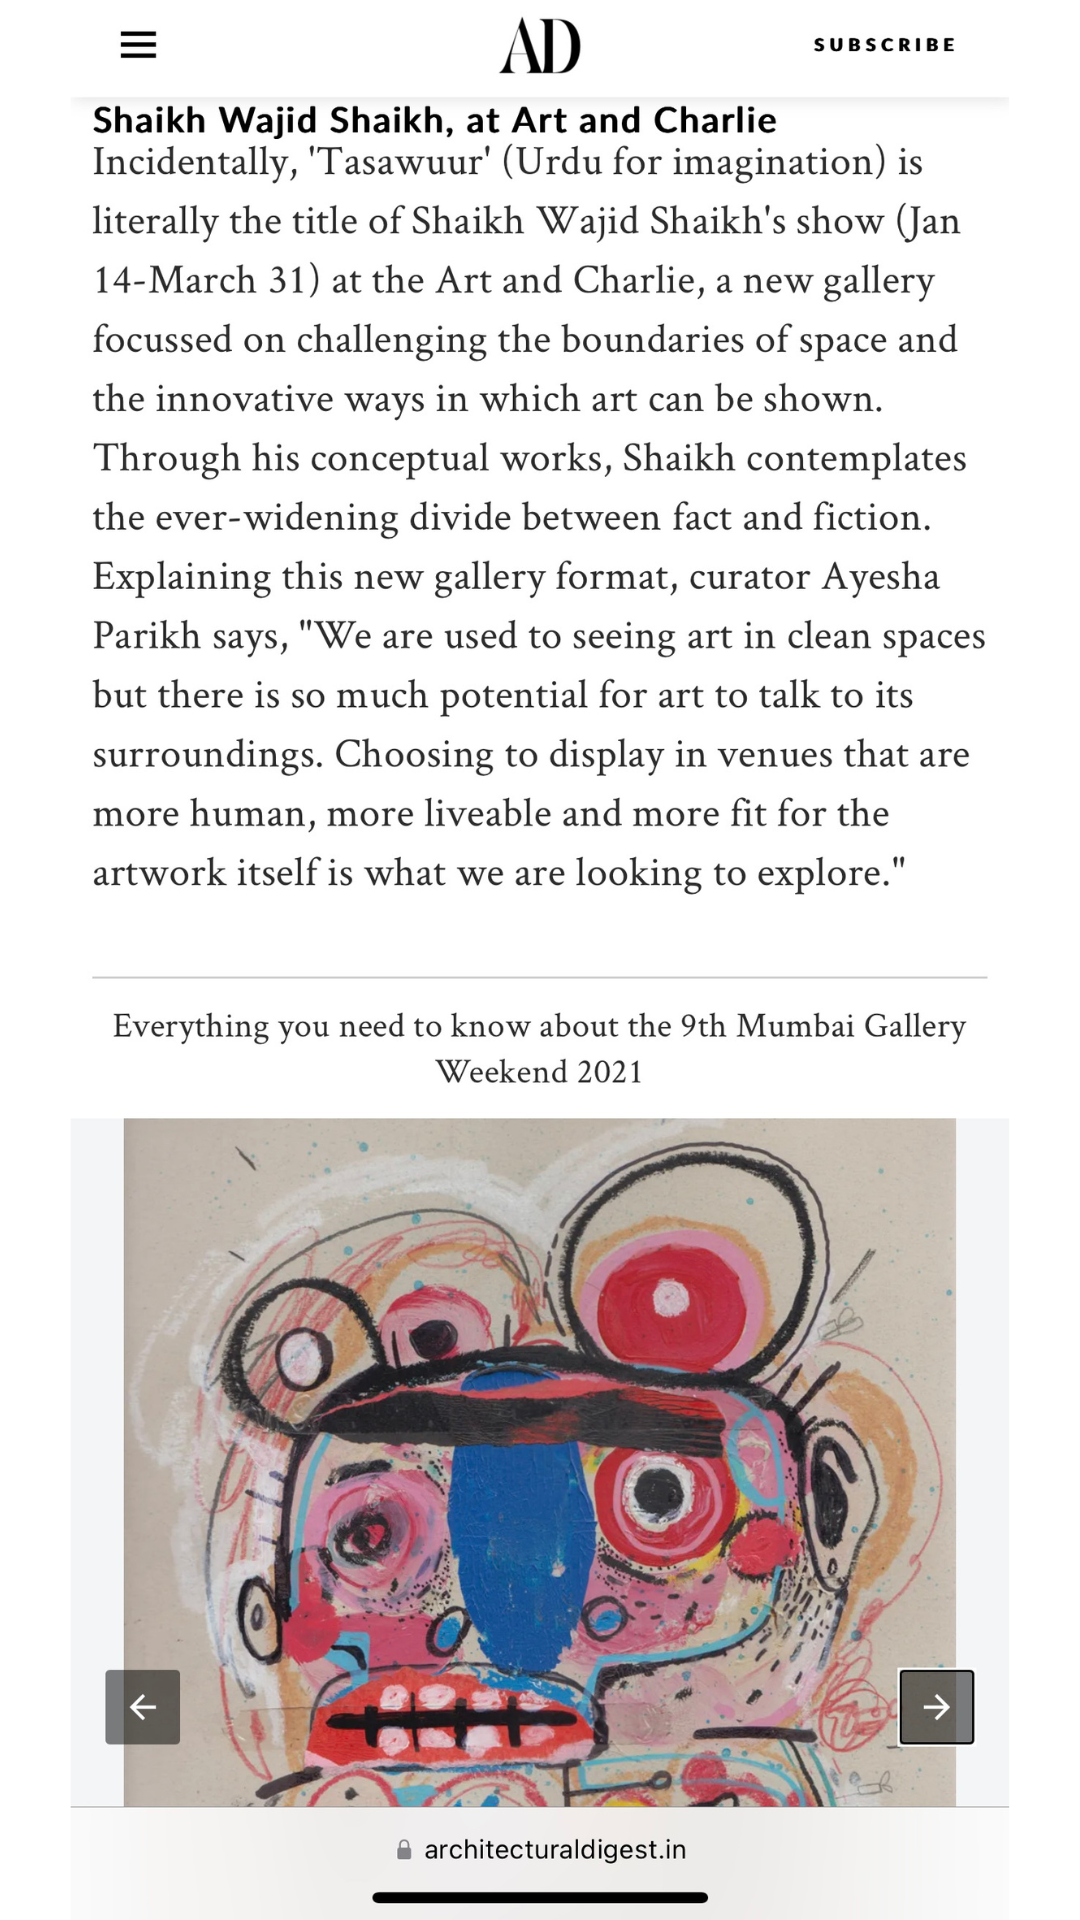 Mumbai Gallery Weekend 2021 - Art and Charlie